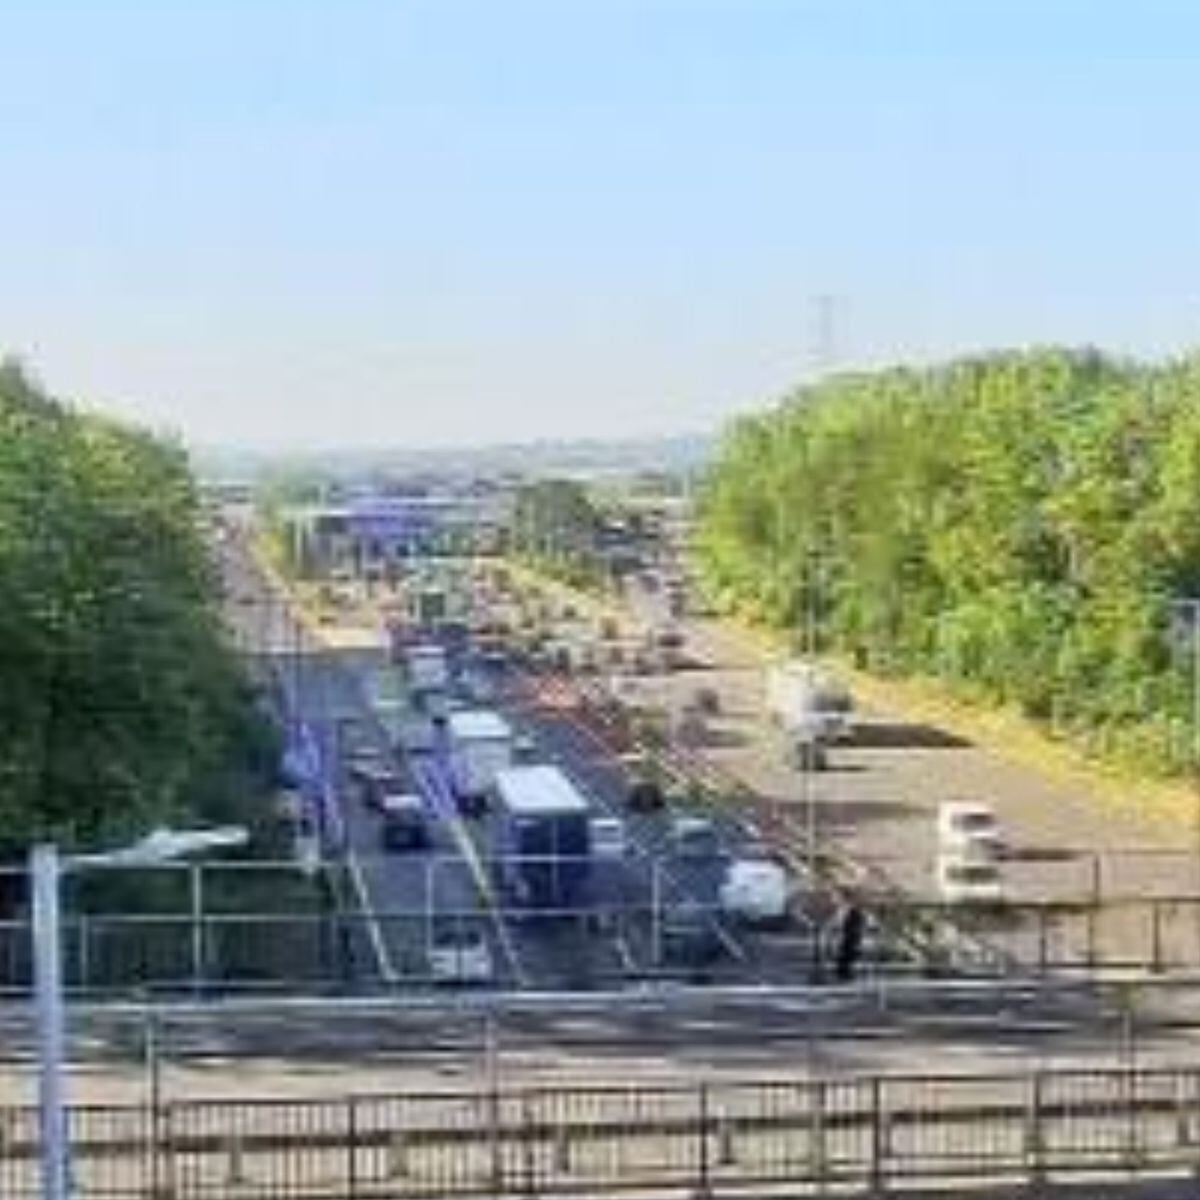 Delays on the M6. Image: Highways Agency/trafficcameras.uk